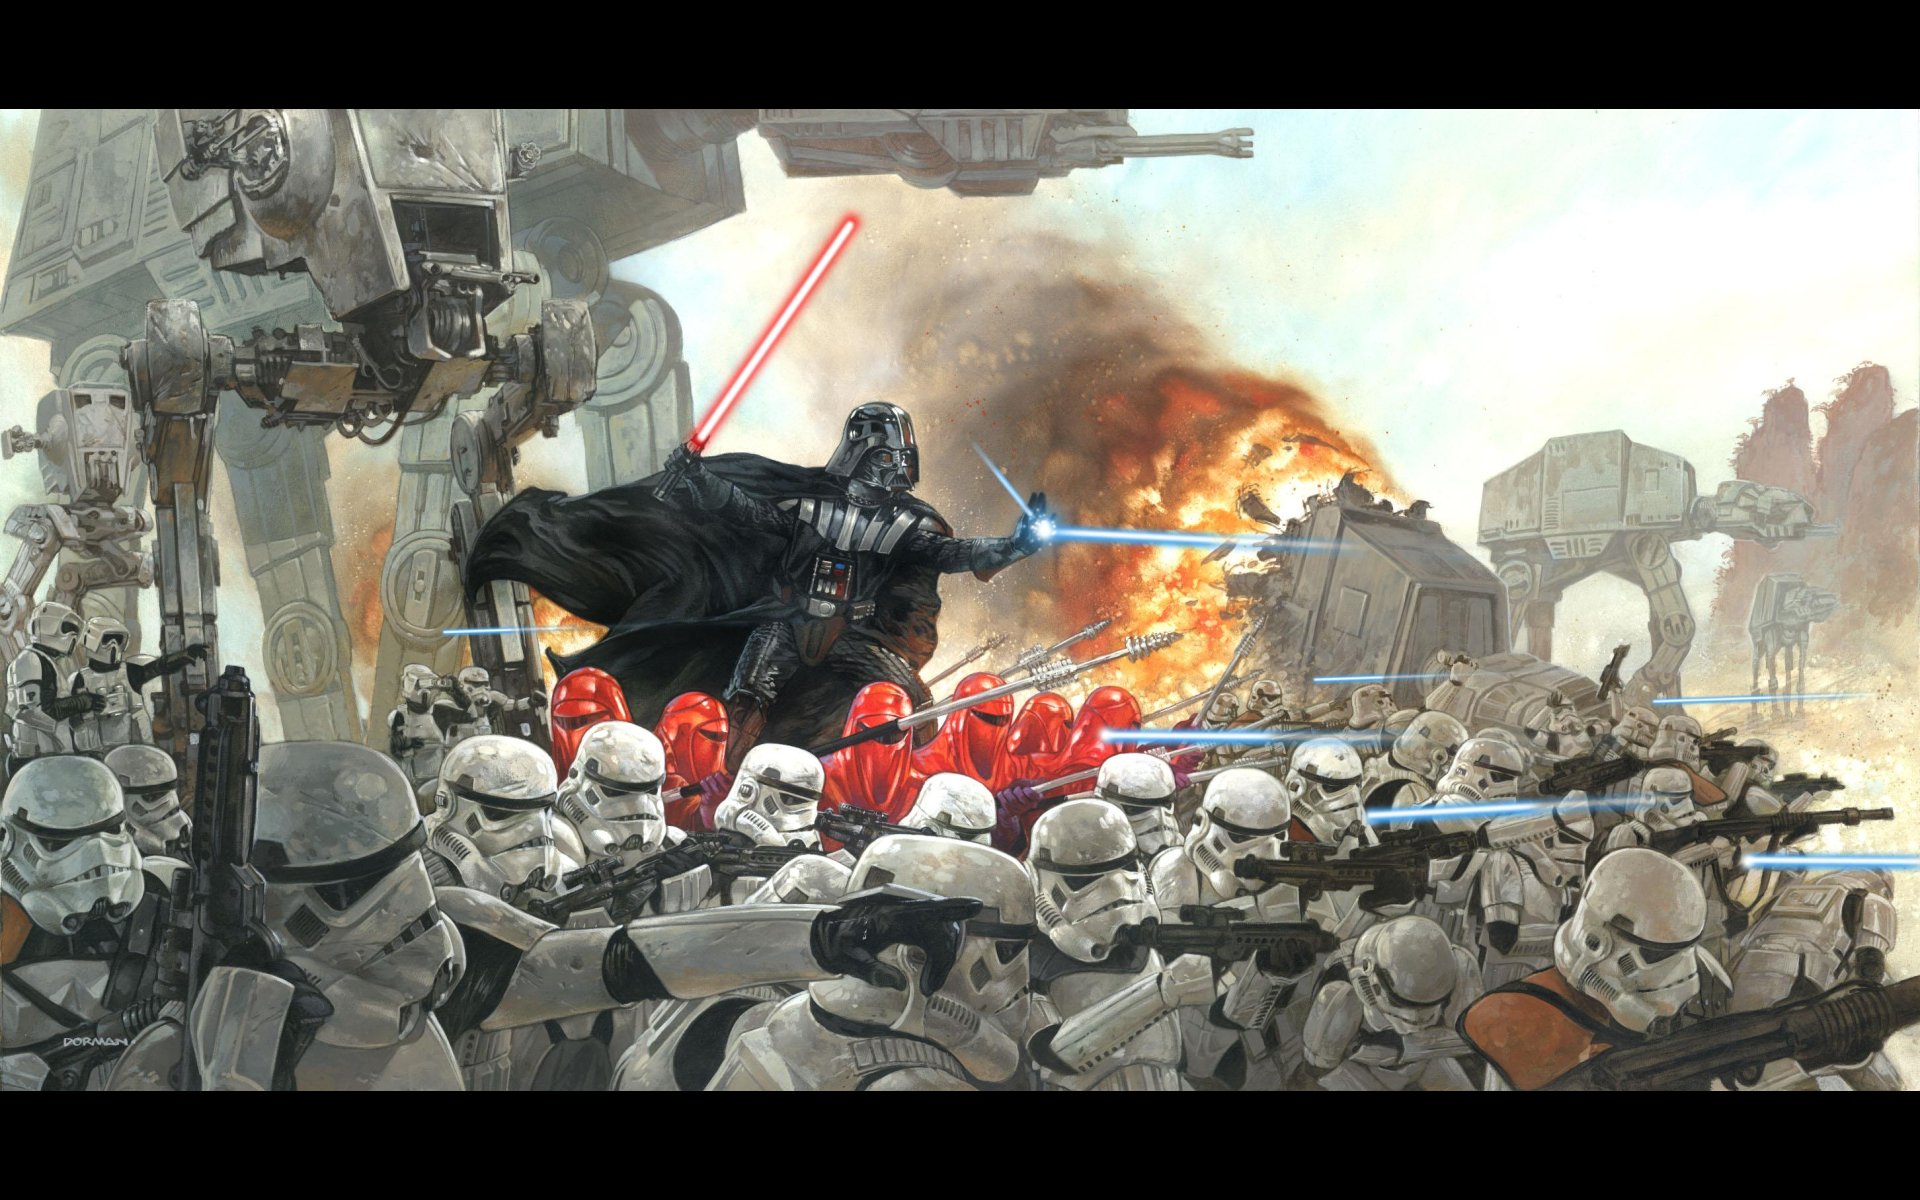 78 Epic Star Wars Wallpaper On Wallpapersafari